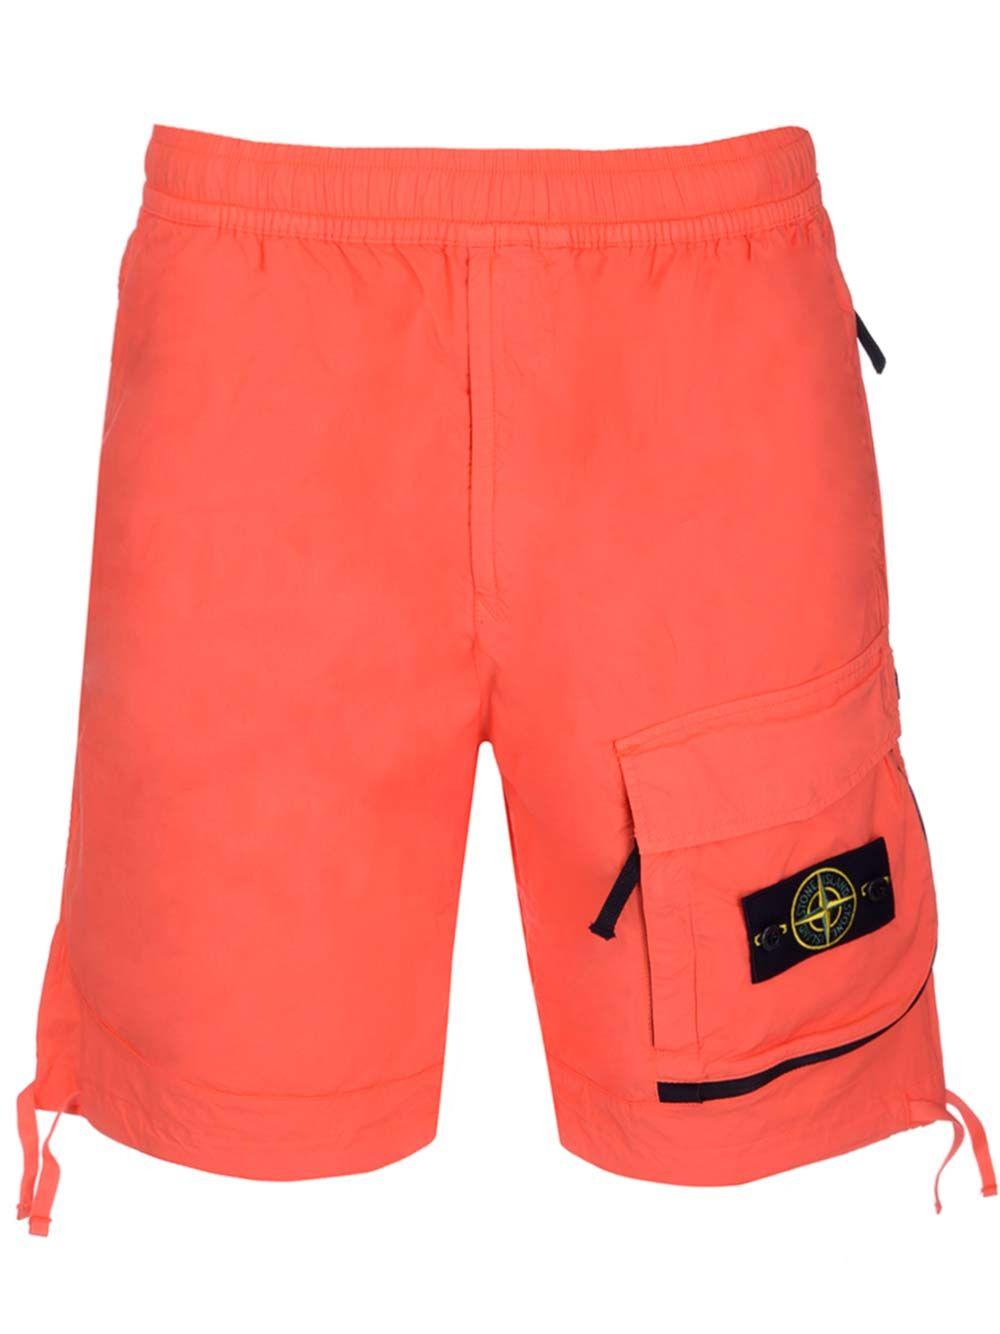 Stone Island Cotton Orange Cargo Shorts for Men - Save 52% | Lyst